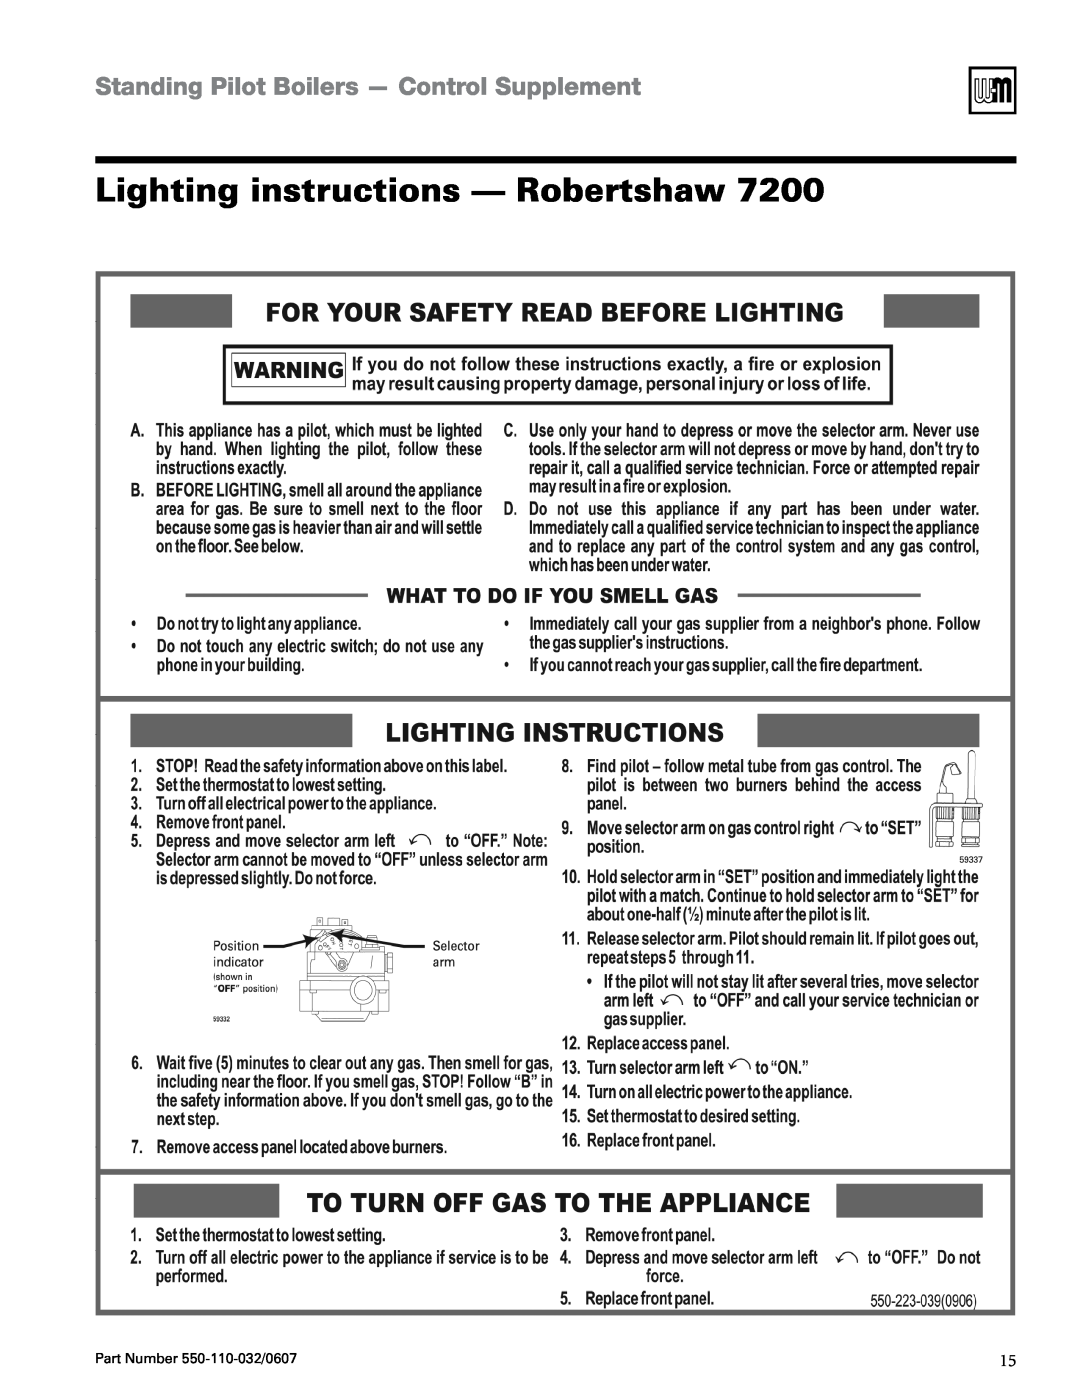 Weil-McLain EG-30 THRU -75 manual Lighting instructions - Robertshaw, Standing Pilot Boilers - Control Supplement 